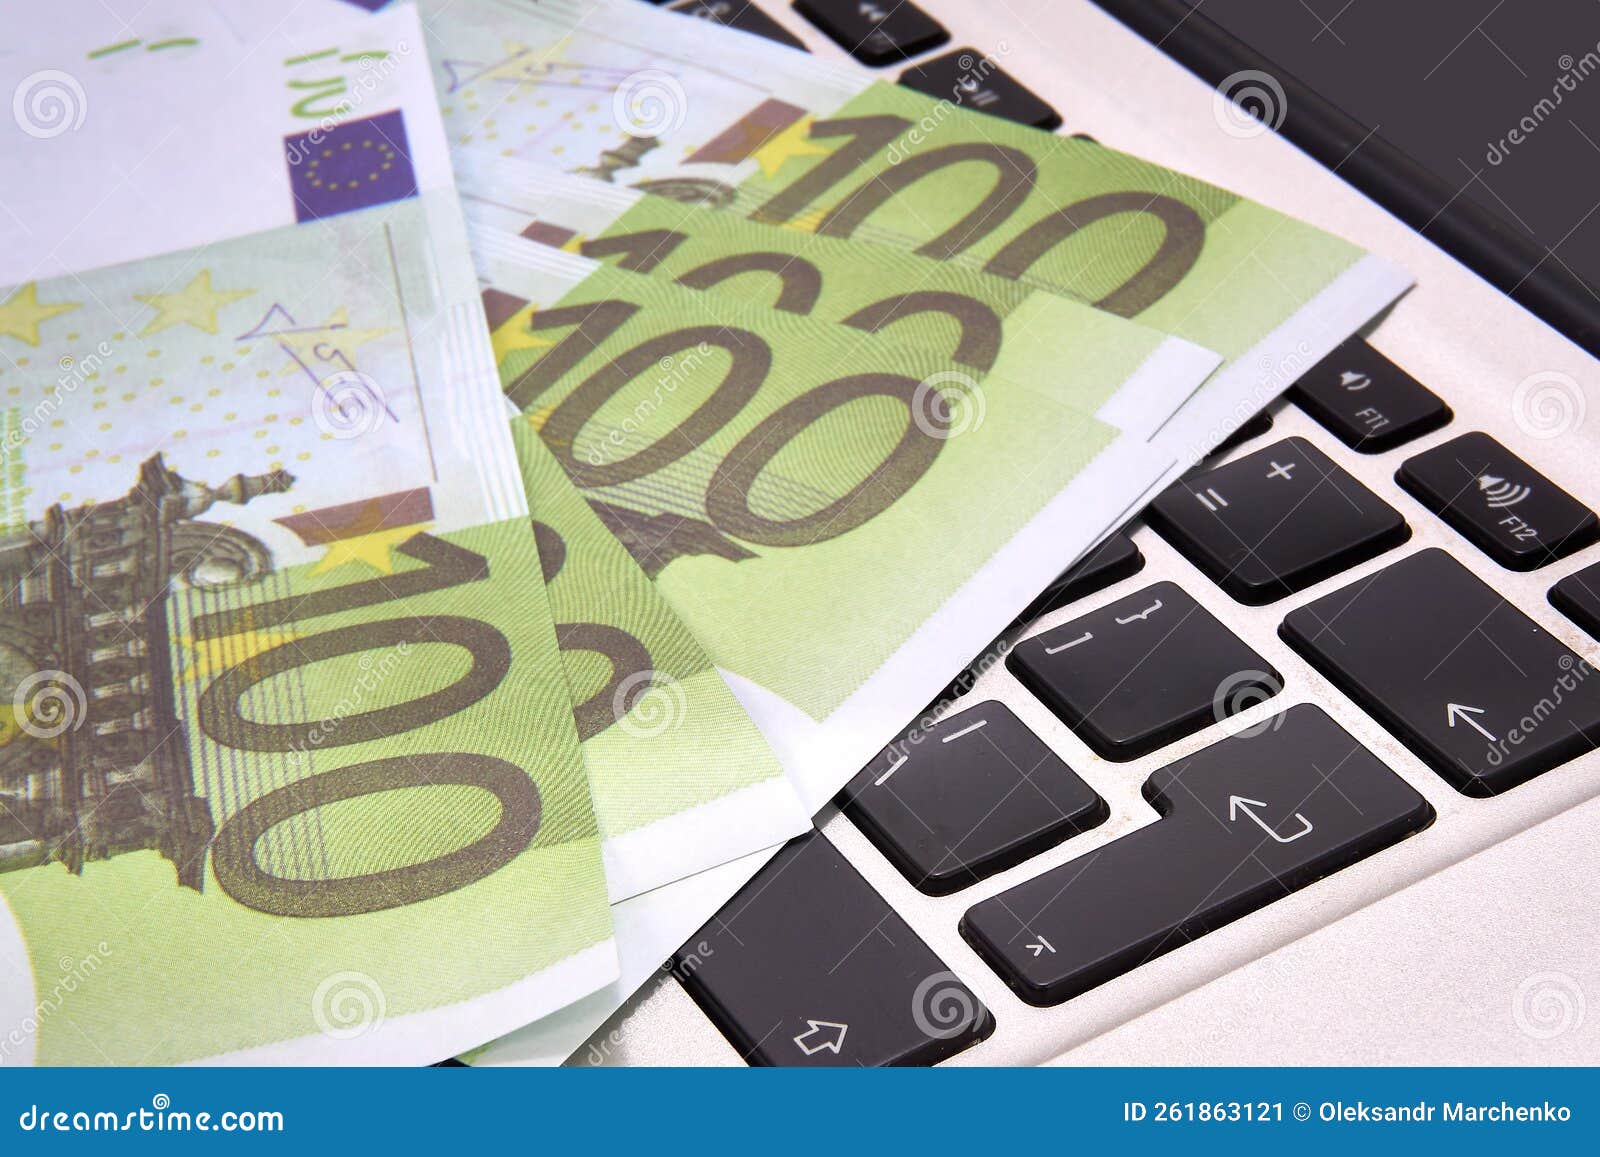 100 euro bills lying on a computer keyboard, close-up.